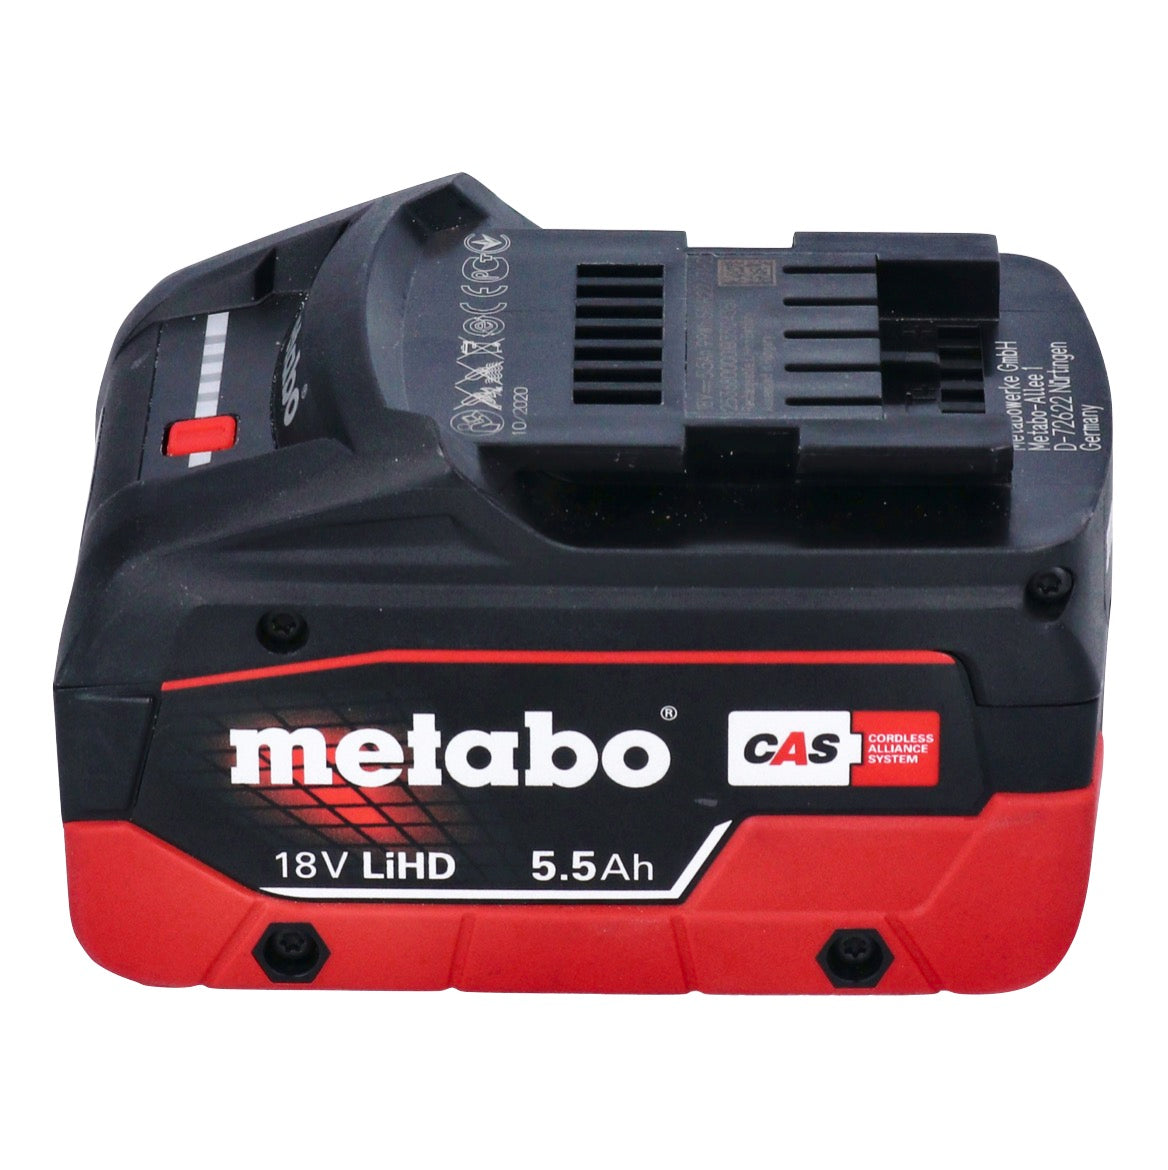 Metabo WVB 18 LTX BL 15-125 Quick Akku Winkelschleifer 18 V 125 mm Brushless + 1x Akku 5,5 Ah + metaBOX - ohne Ladegerät